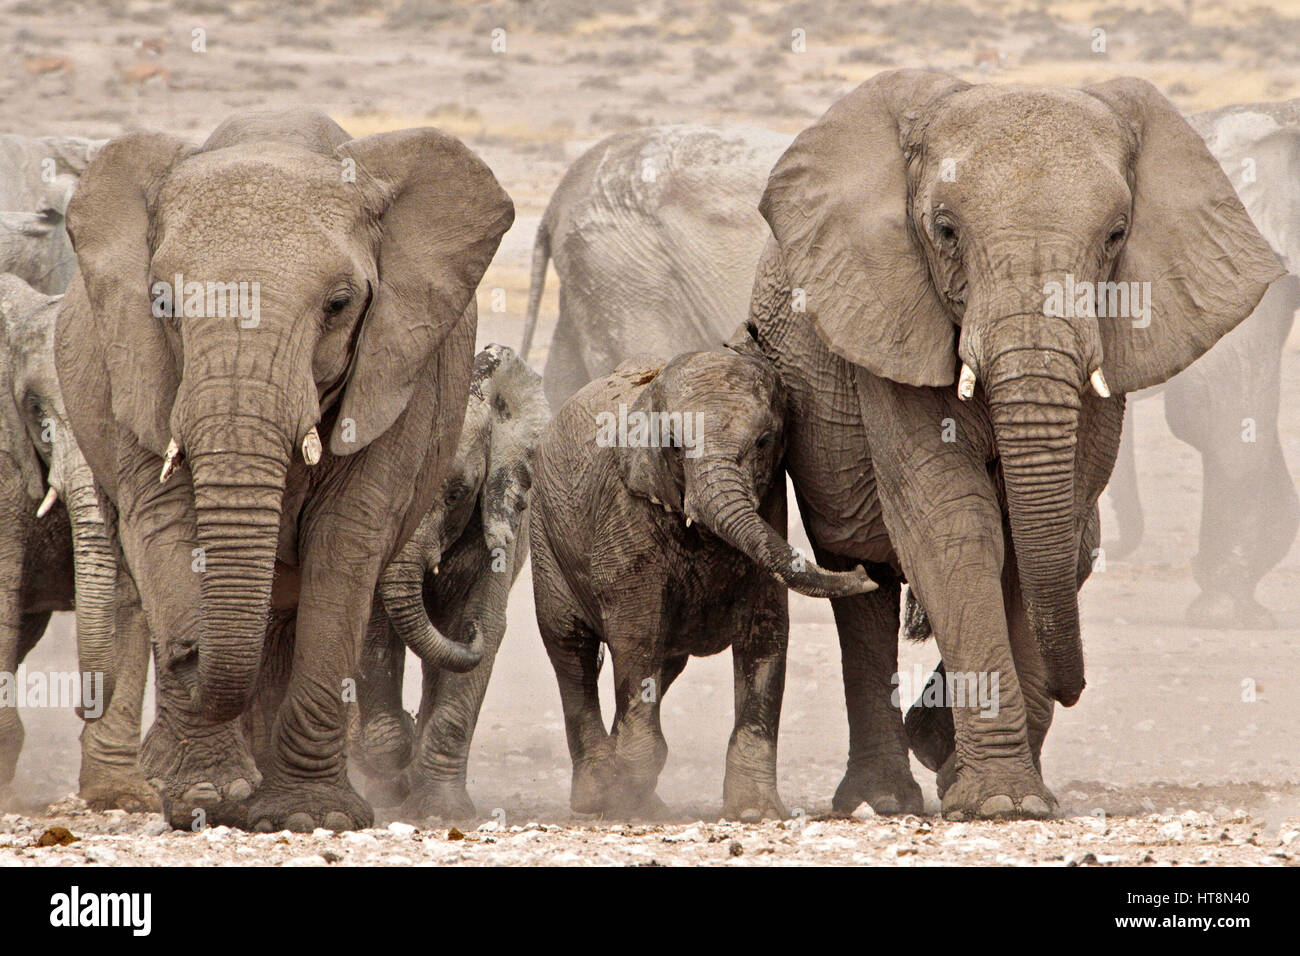 Baby elephants in the breeding herd Stock Photo